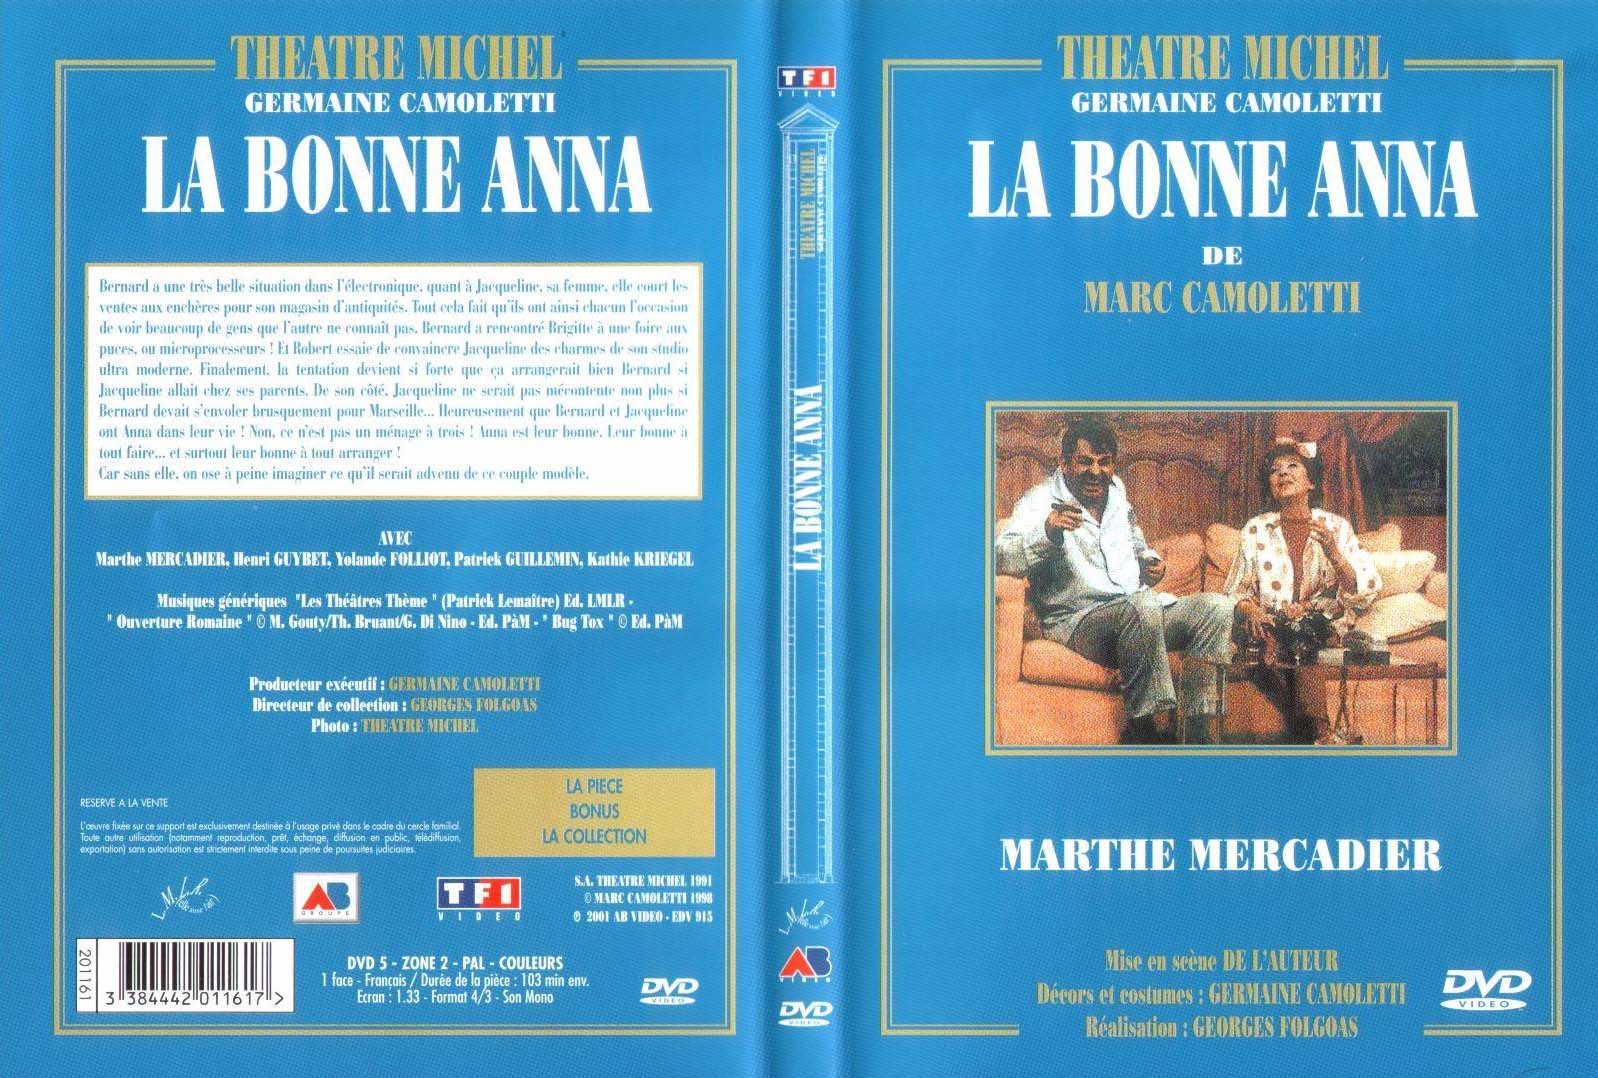 Jaquette DVD Theatre Michel - la bonne anna